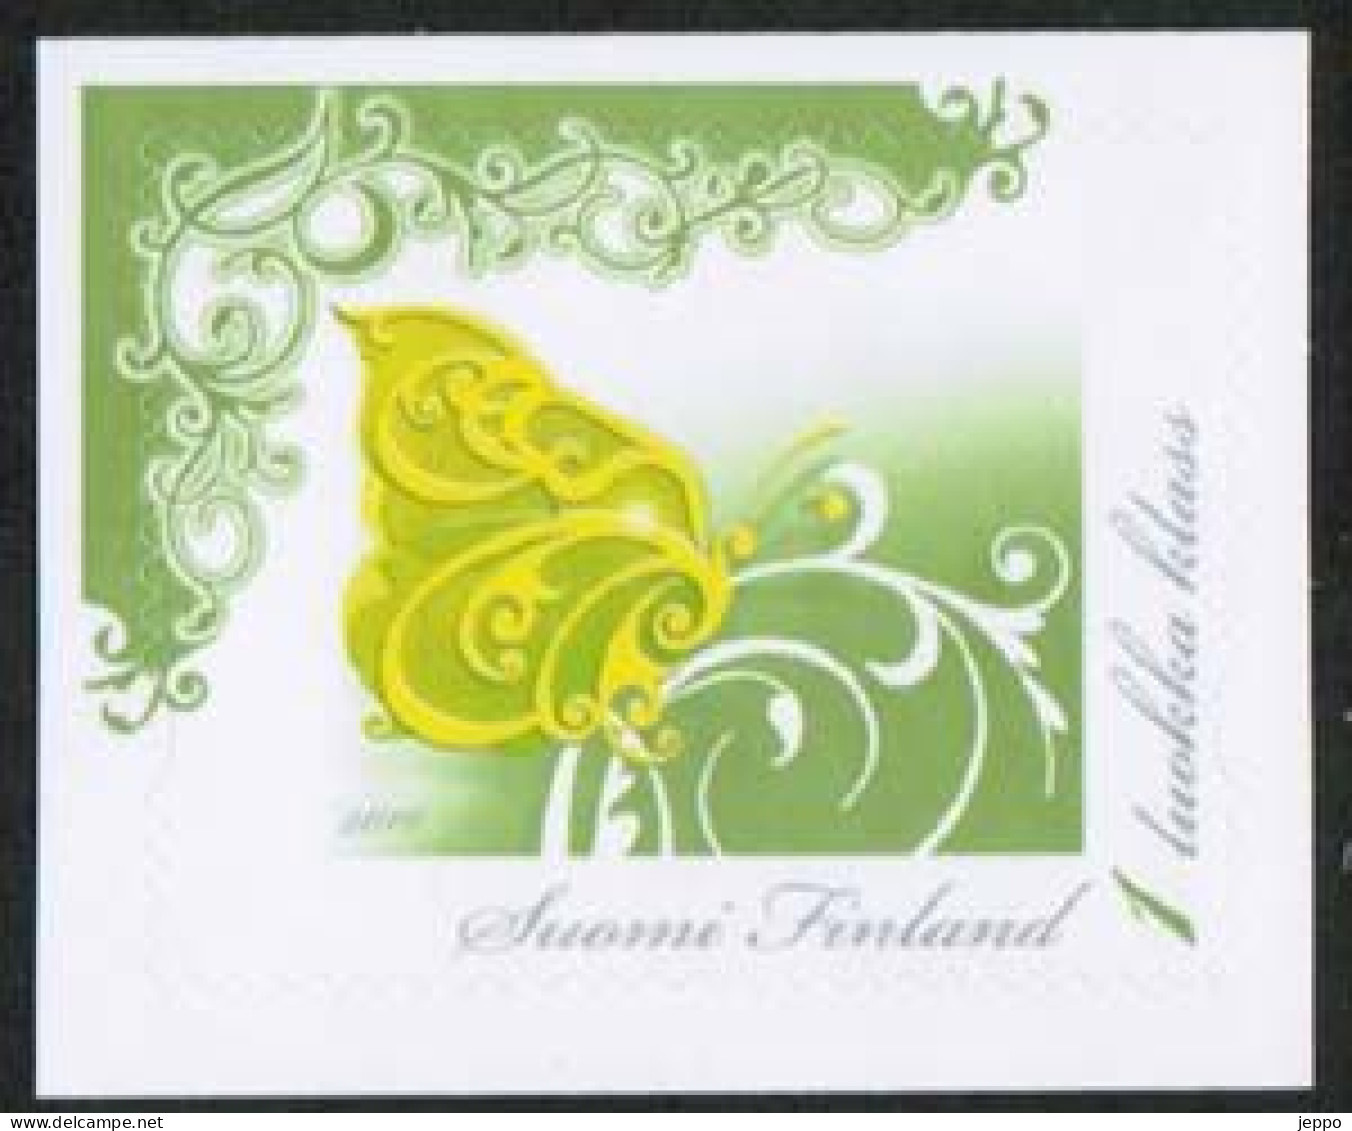 2010 Finland, Personal Stamp - Wings MNH. - Ongebruikt